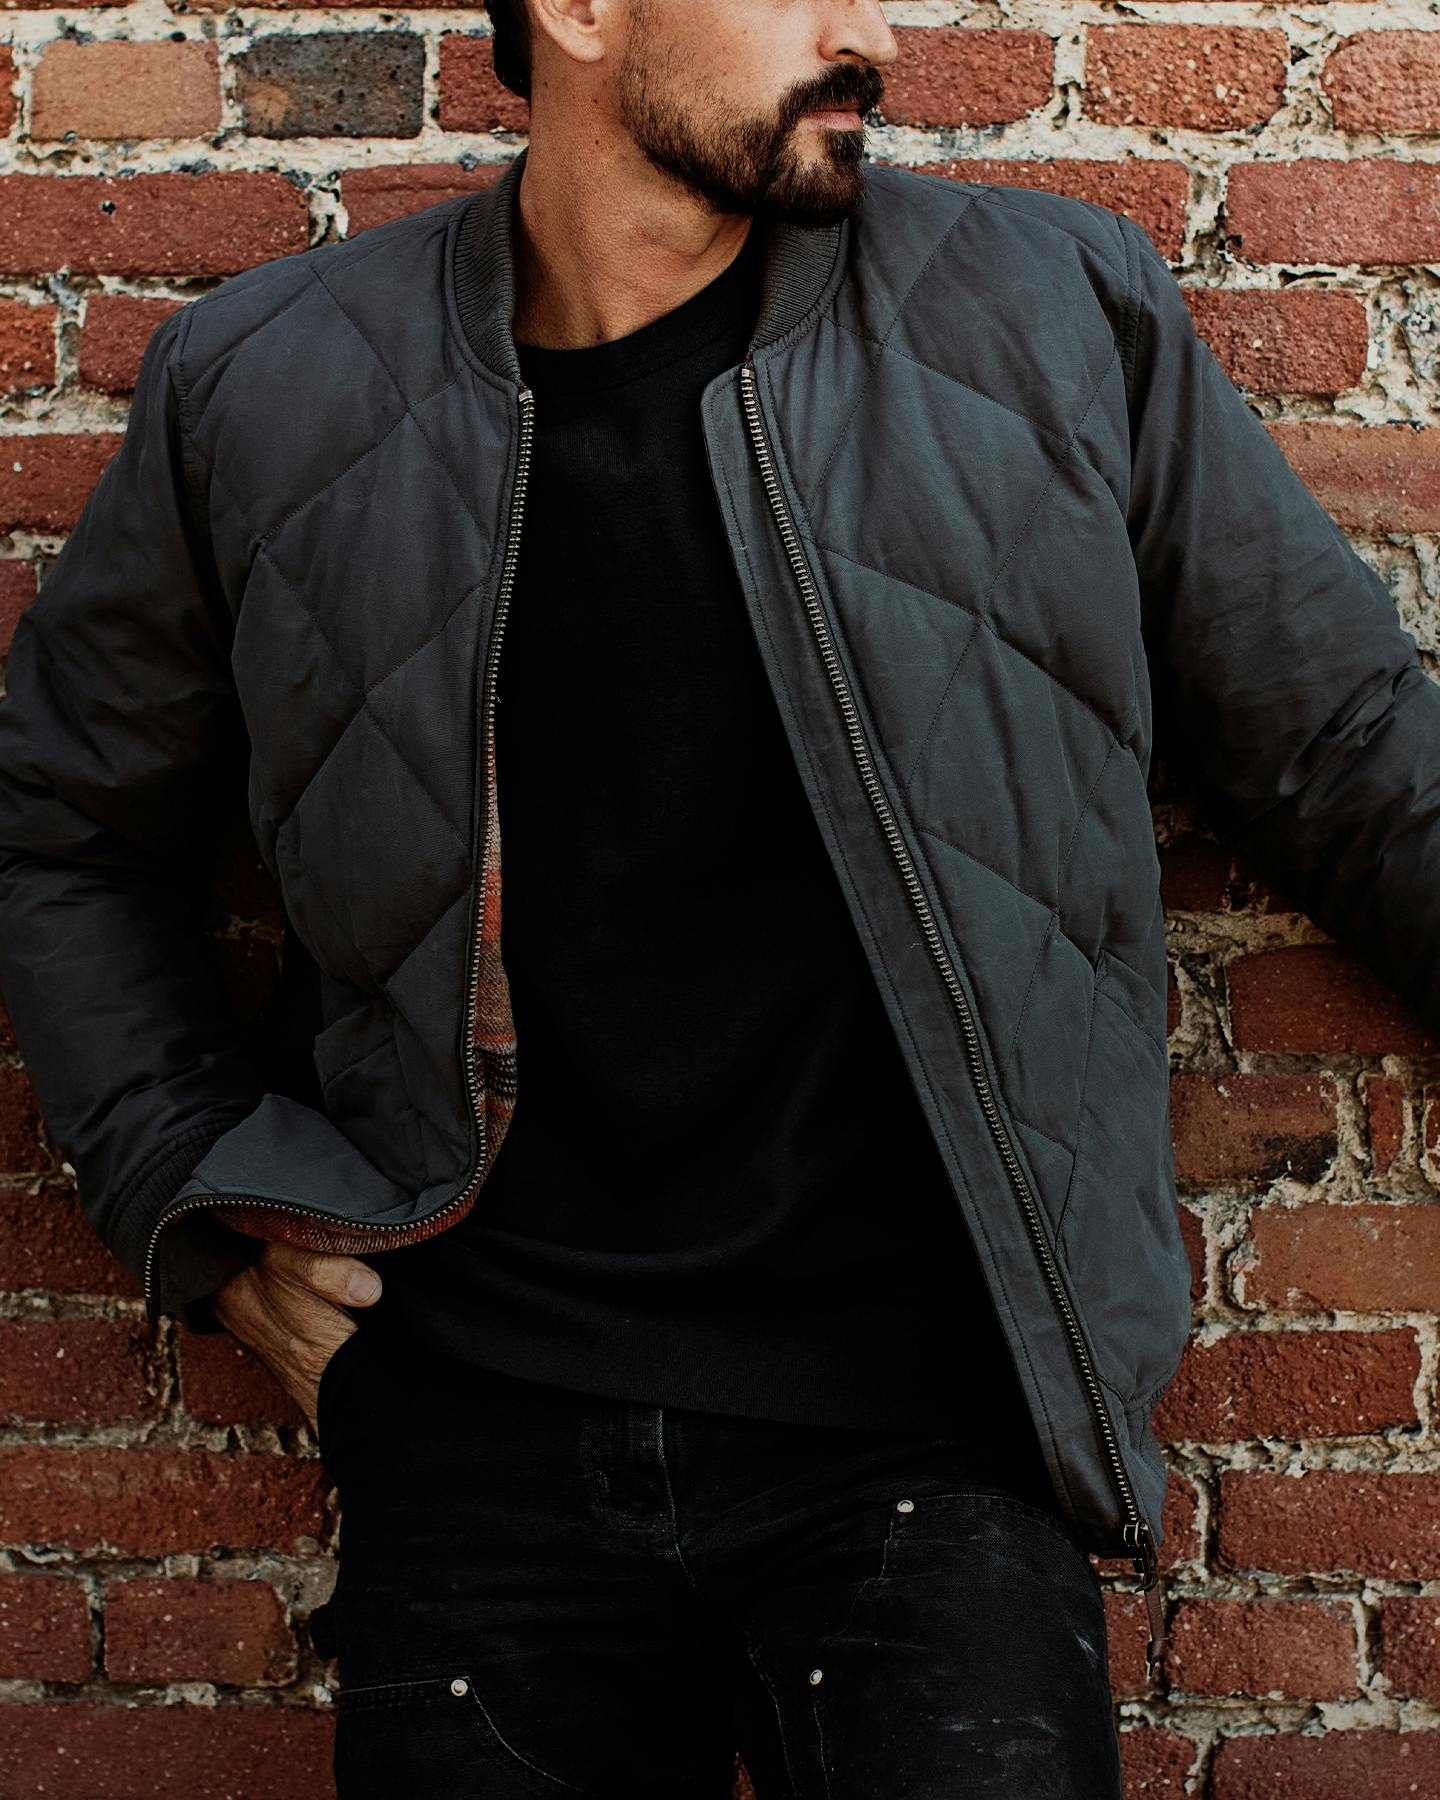 Man wearing jacket by brick wall